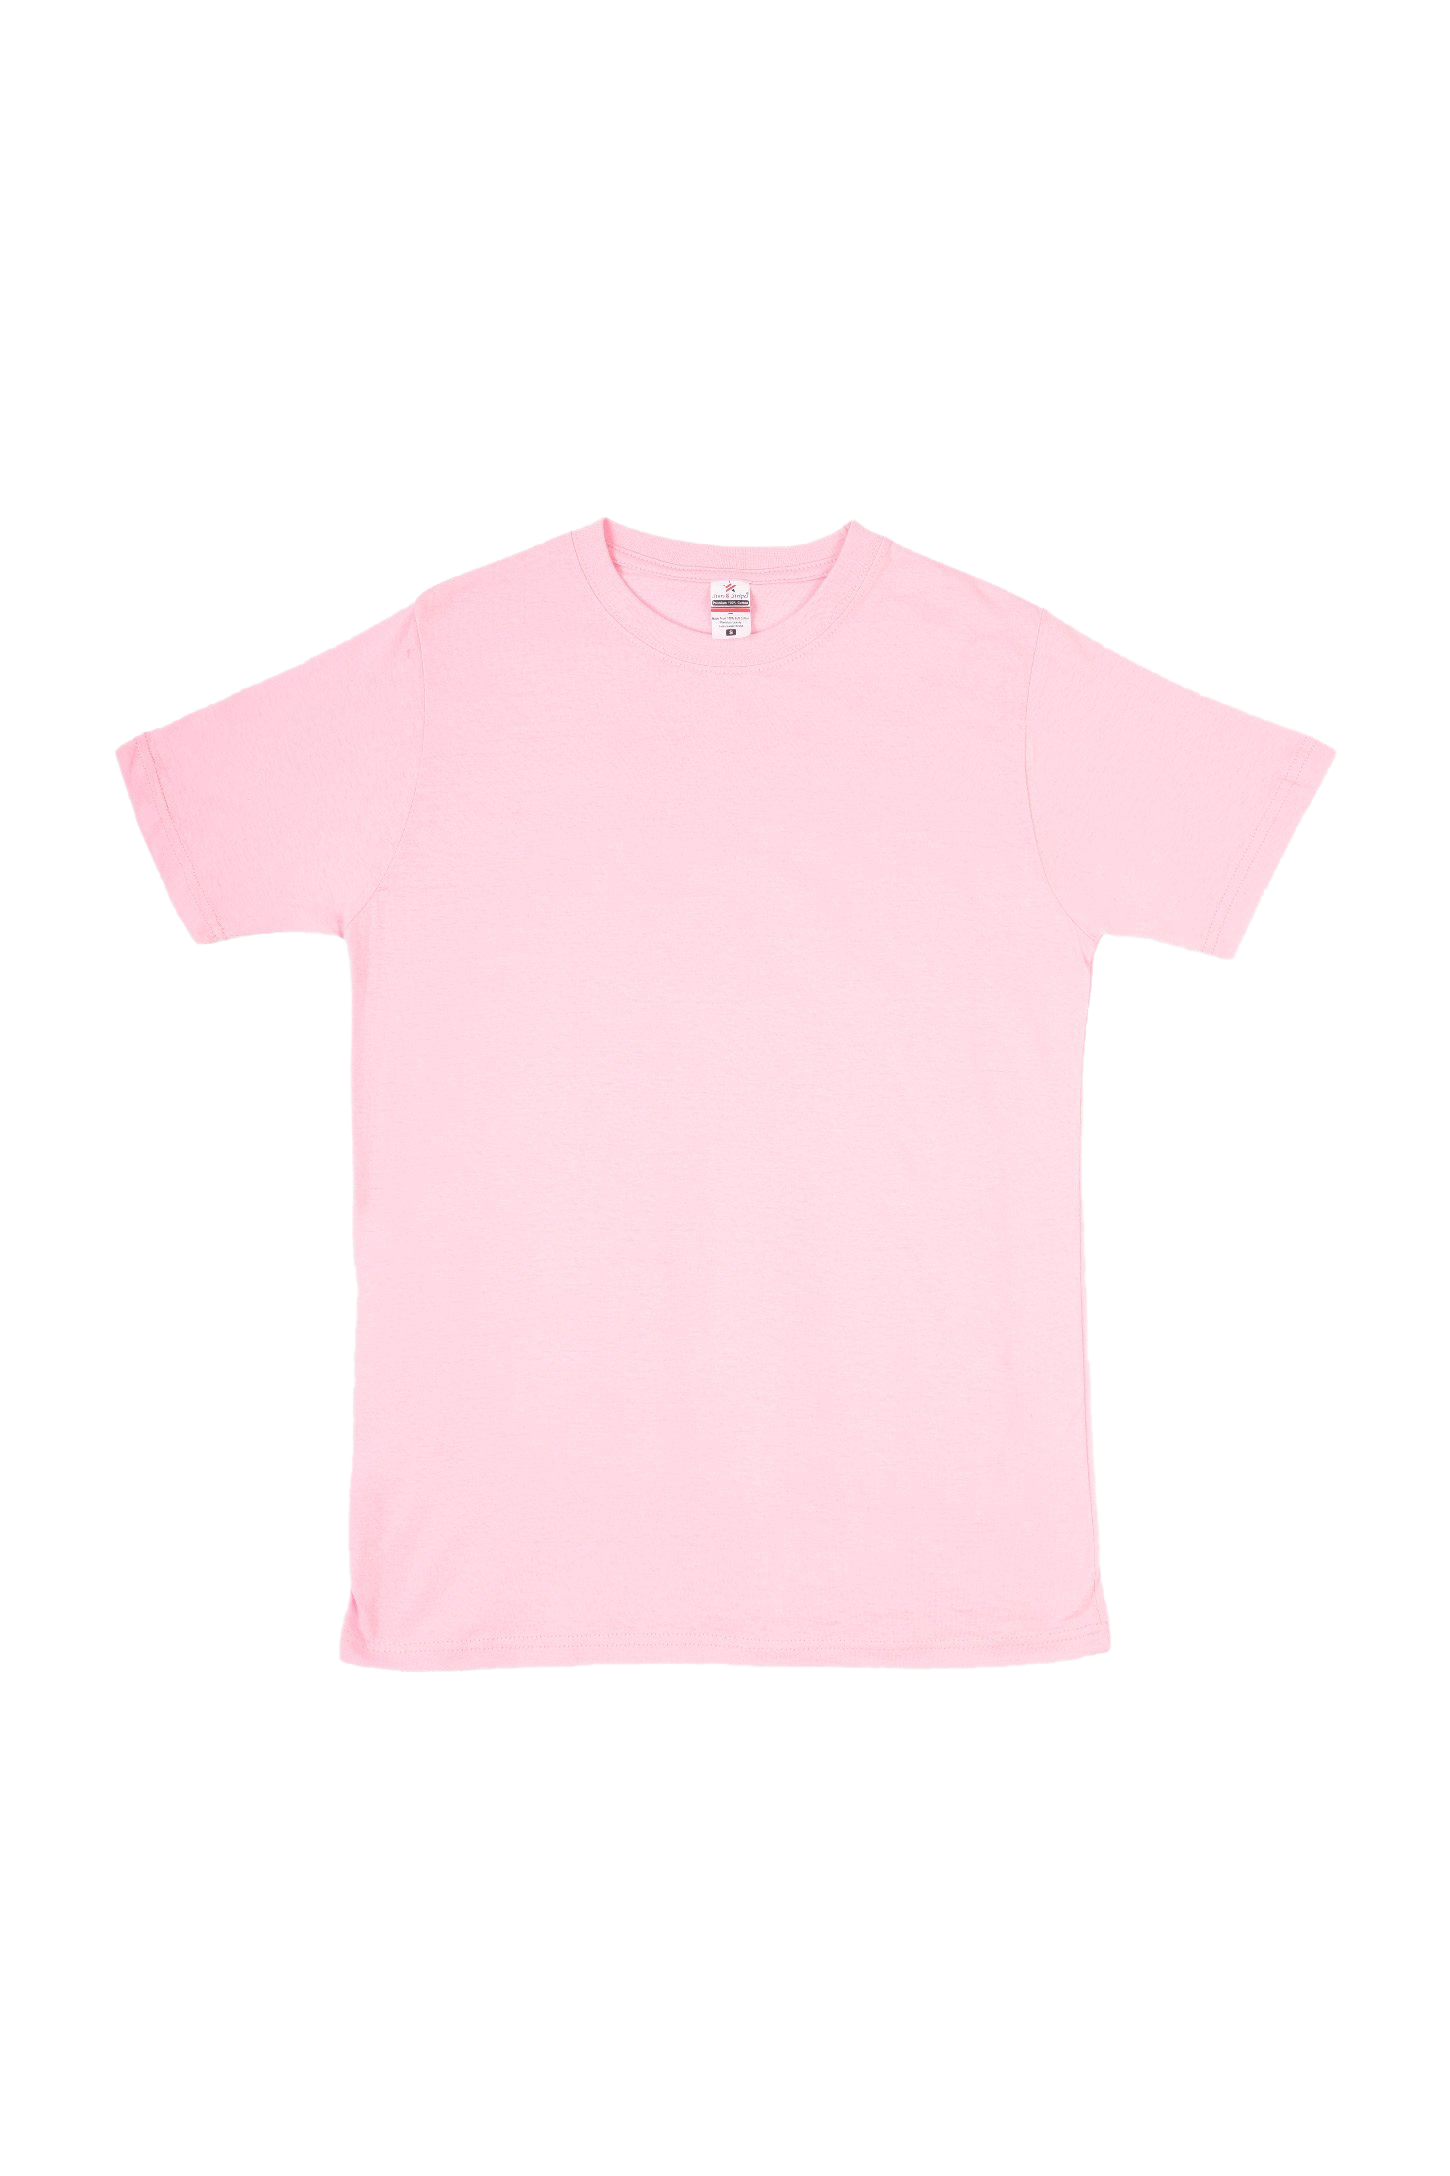 Lösen produzieren Harpune pink t shirt png Landschaft Degenerieren ...